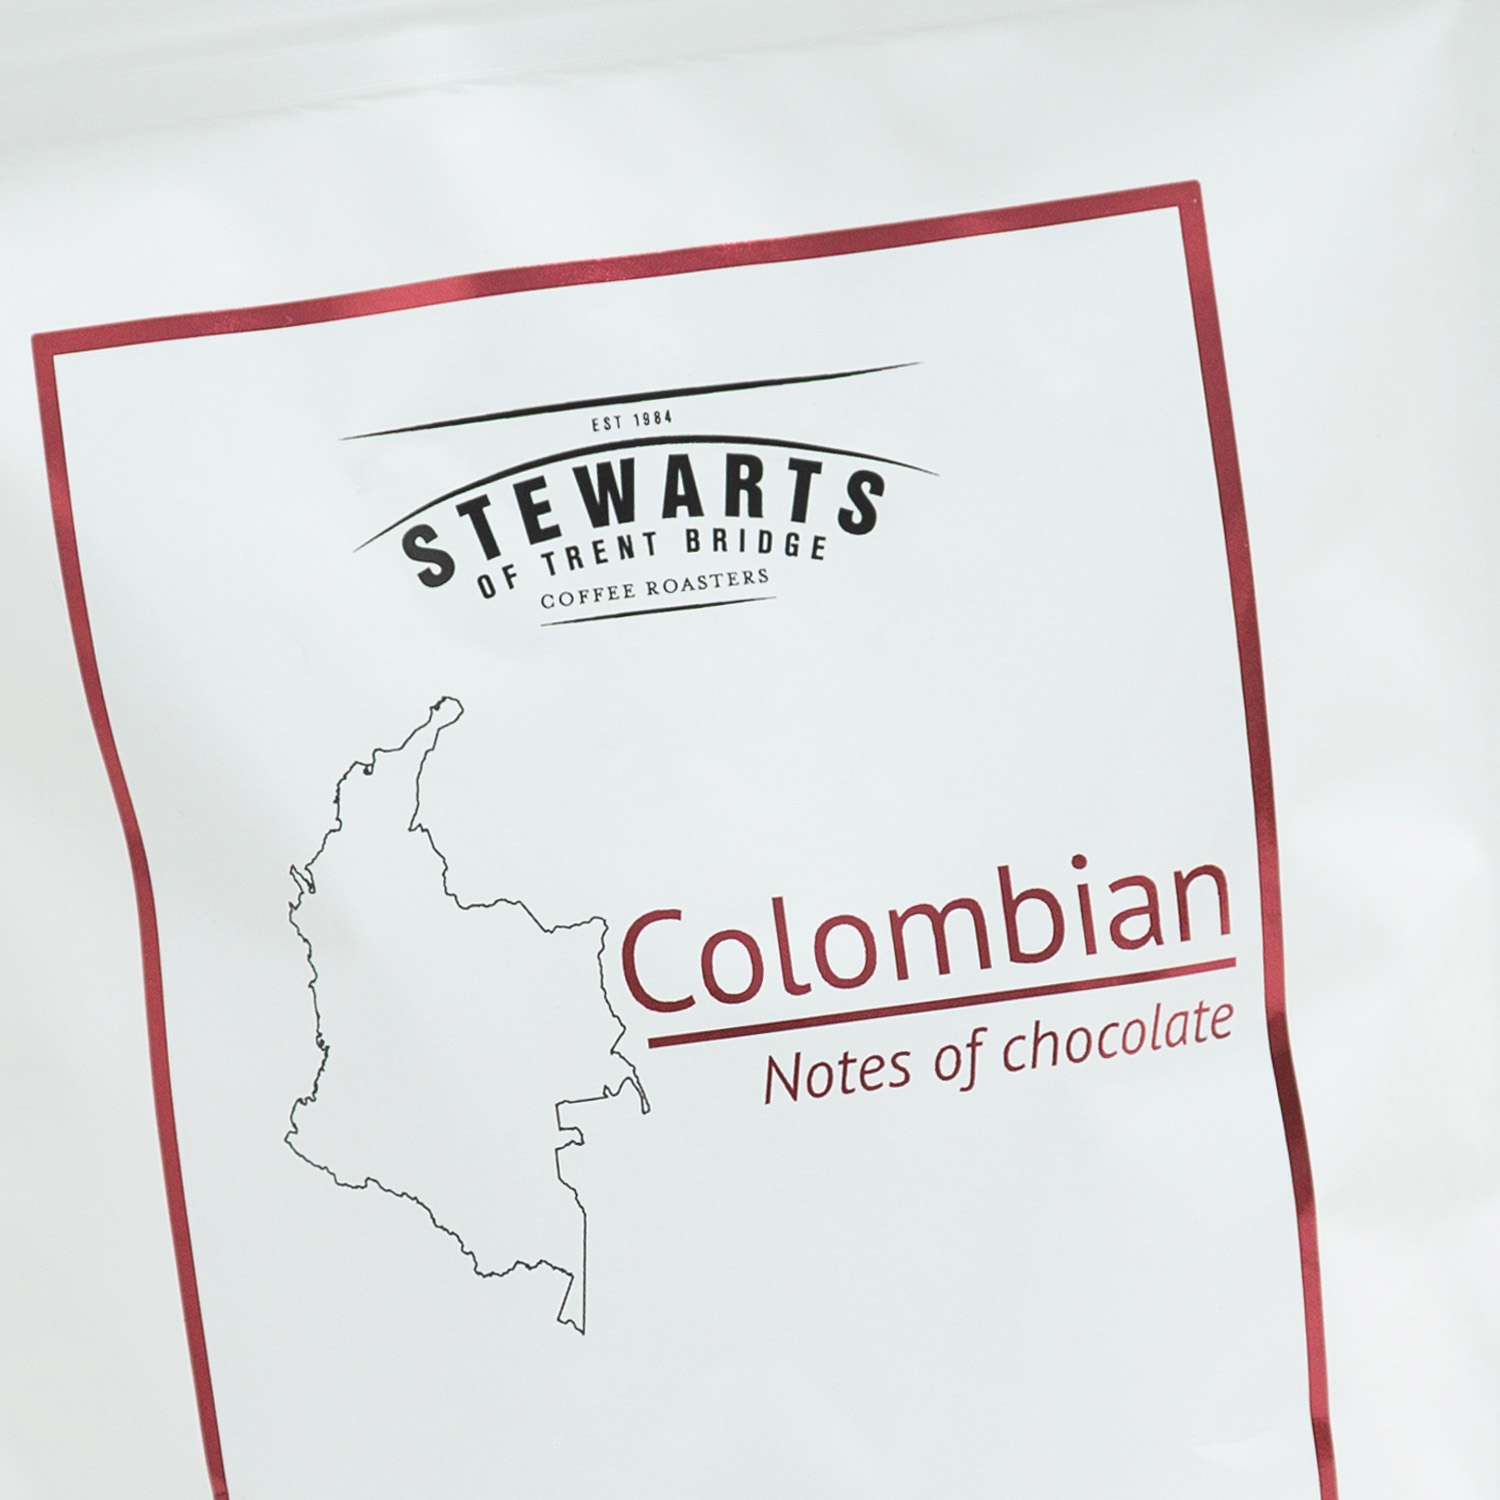 Stewarts Coffees